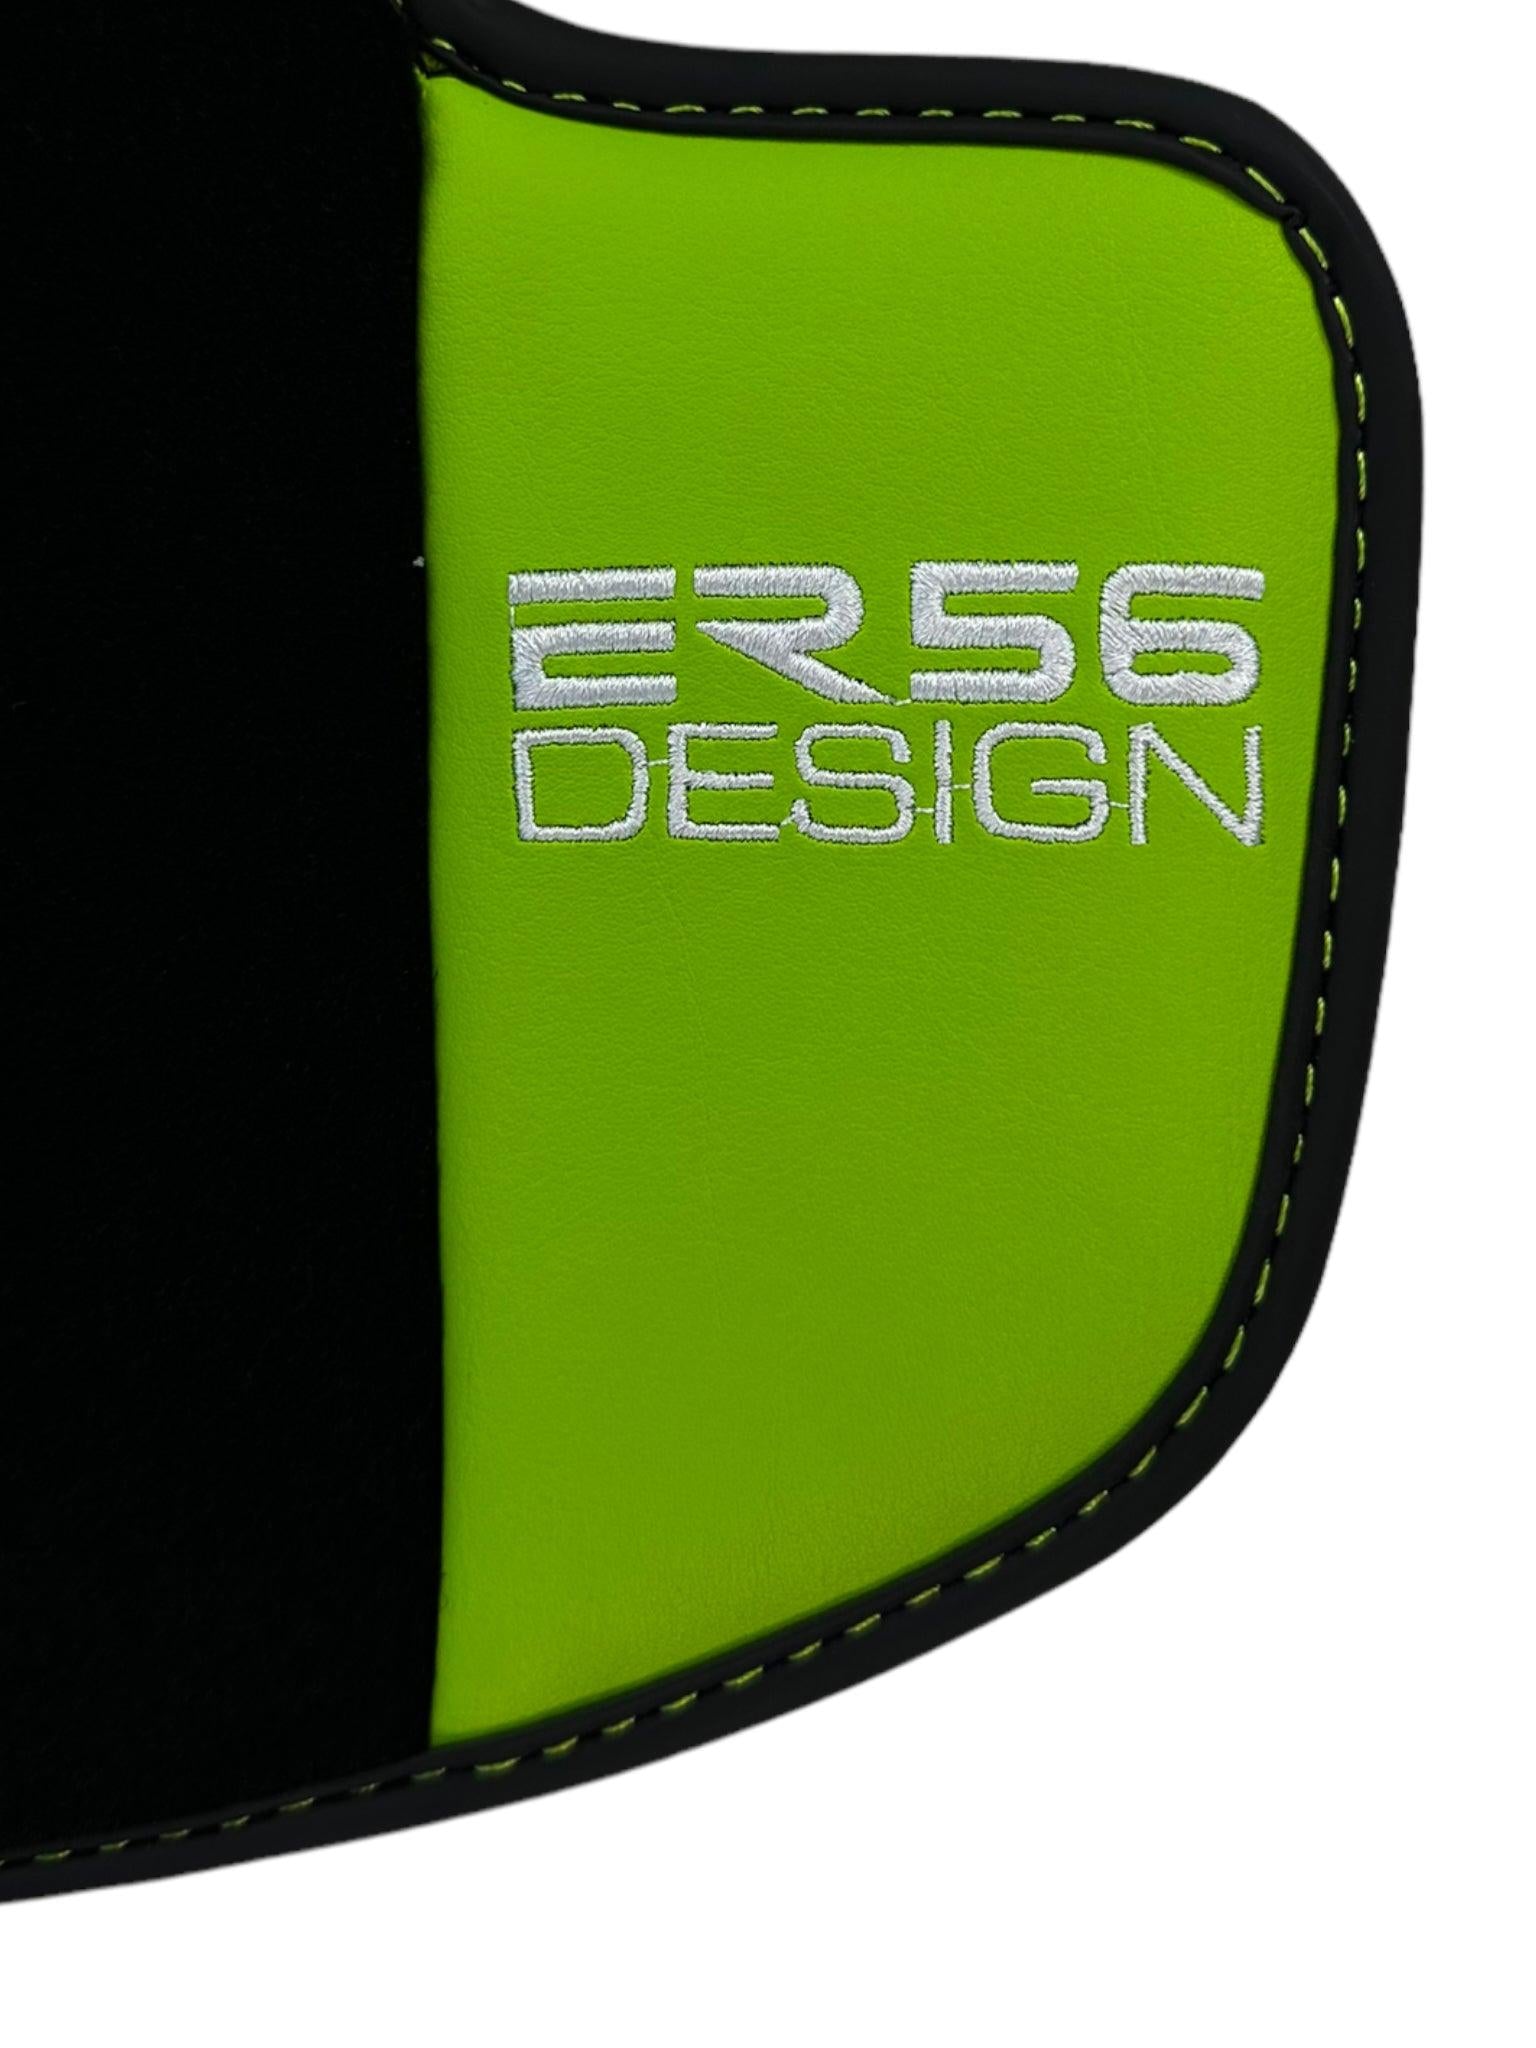 Black Floor Mats for Porsche 911 - 991 (2012-2019) with Green Leather ER56 Design - AutoWin